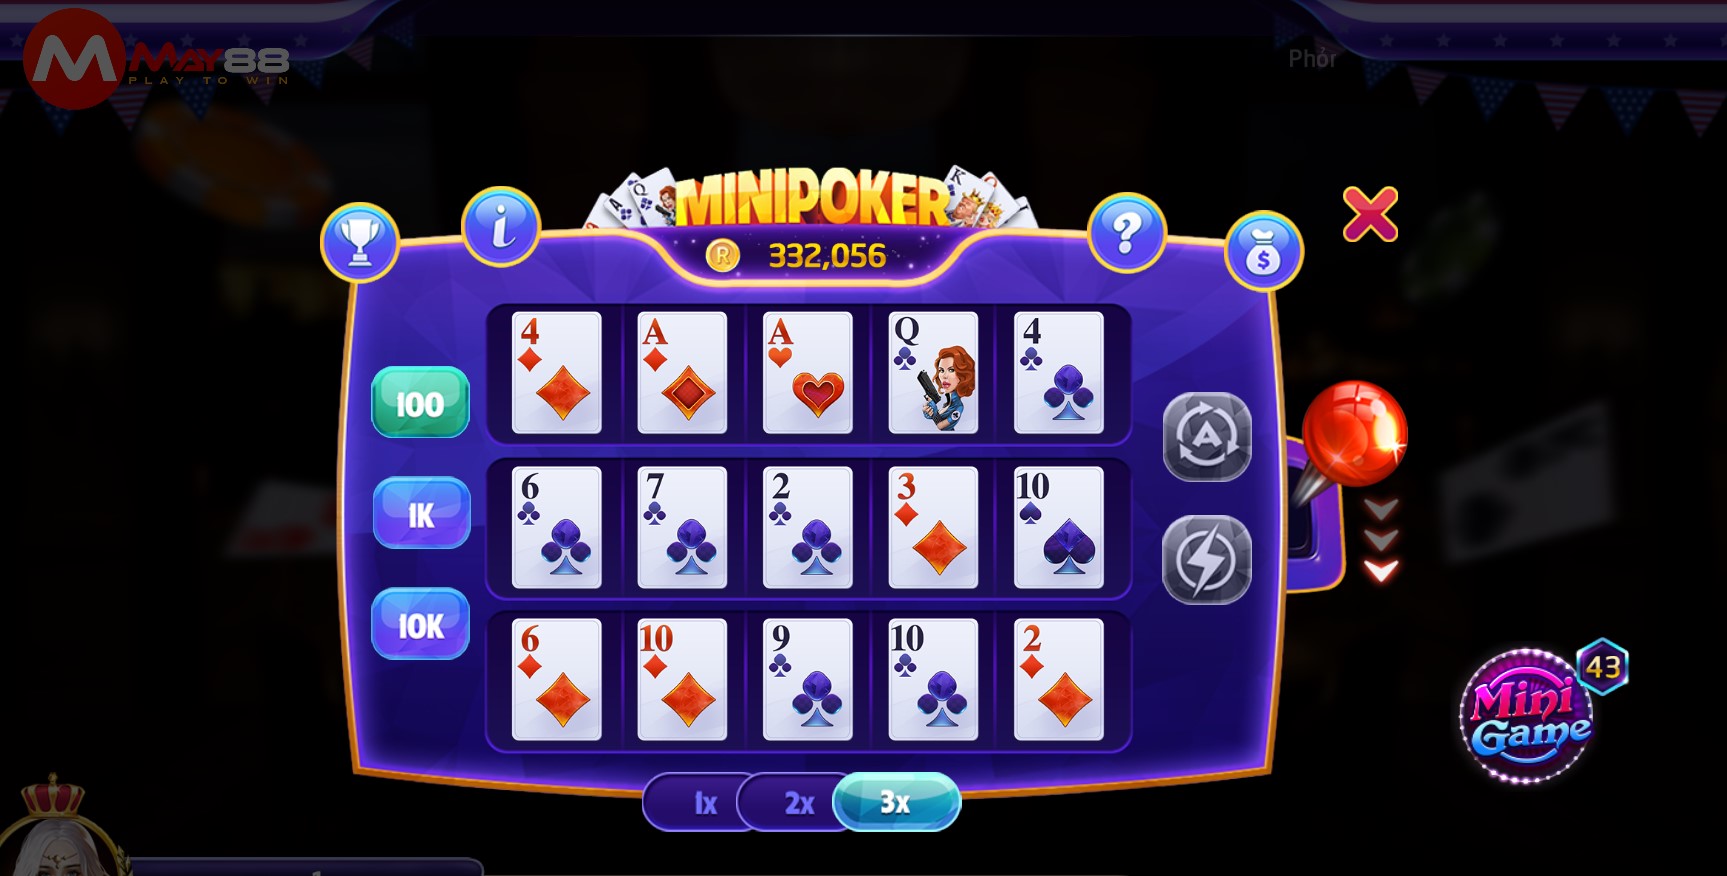 Giới thiệu game Mini Poker nổ hũ của May88 club